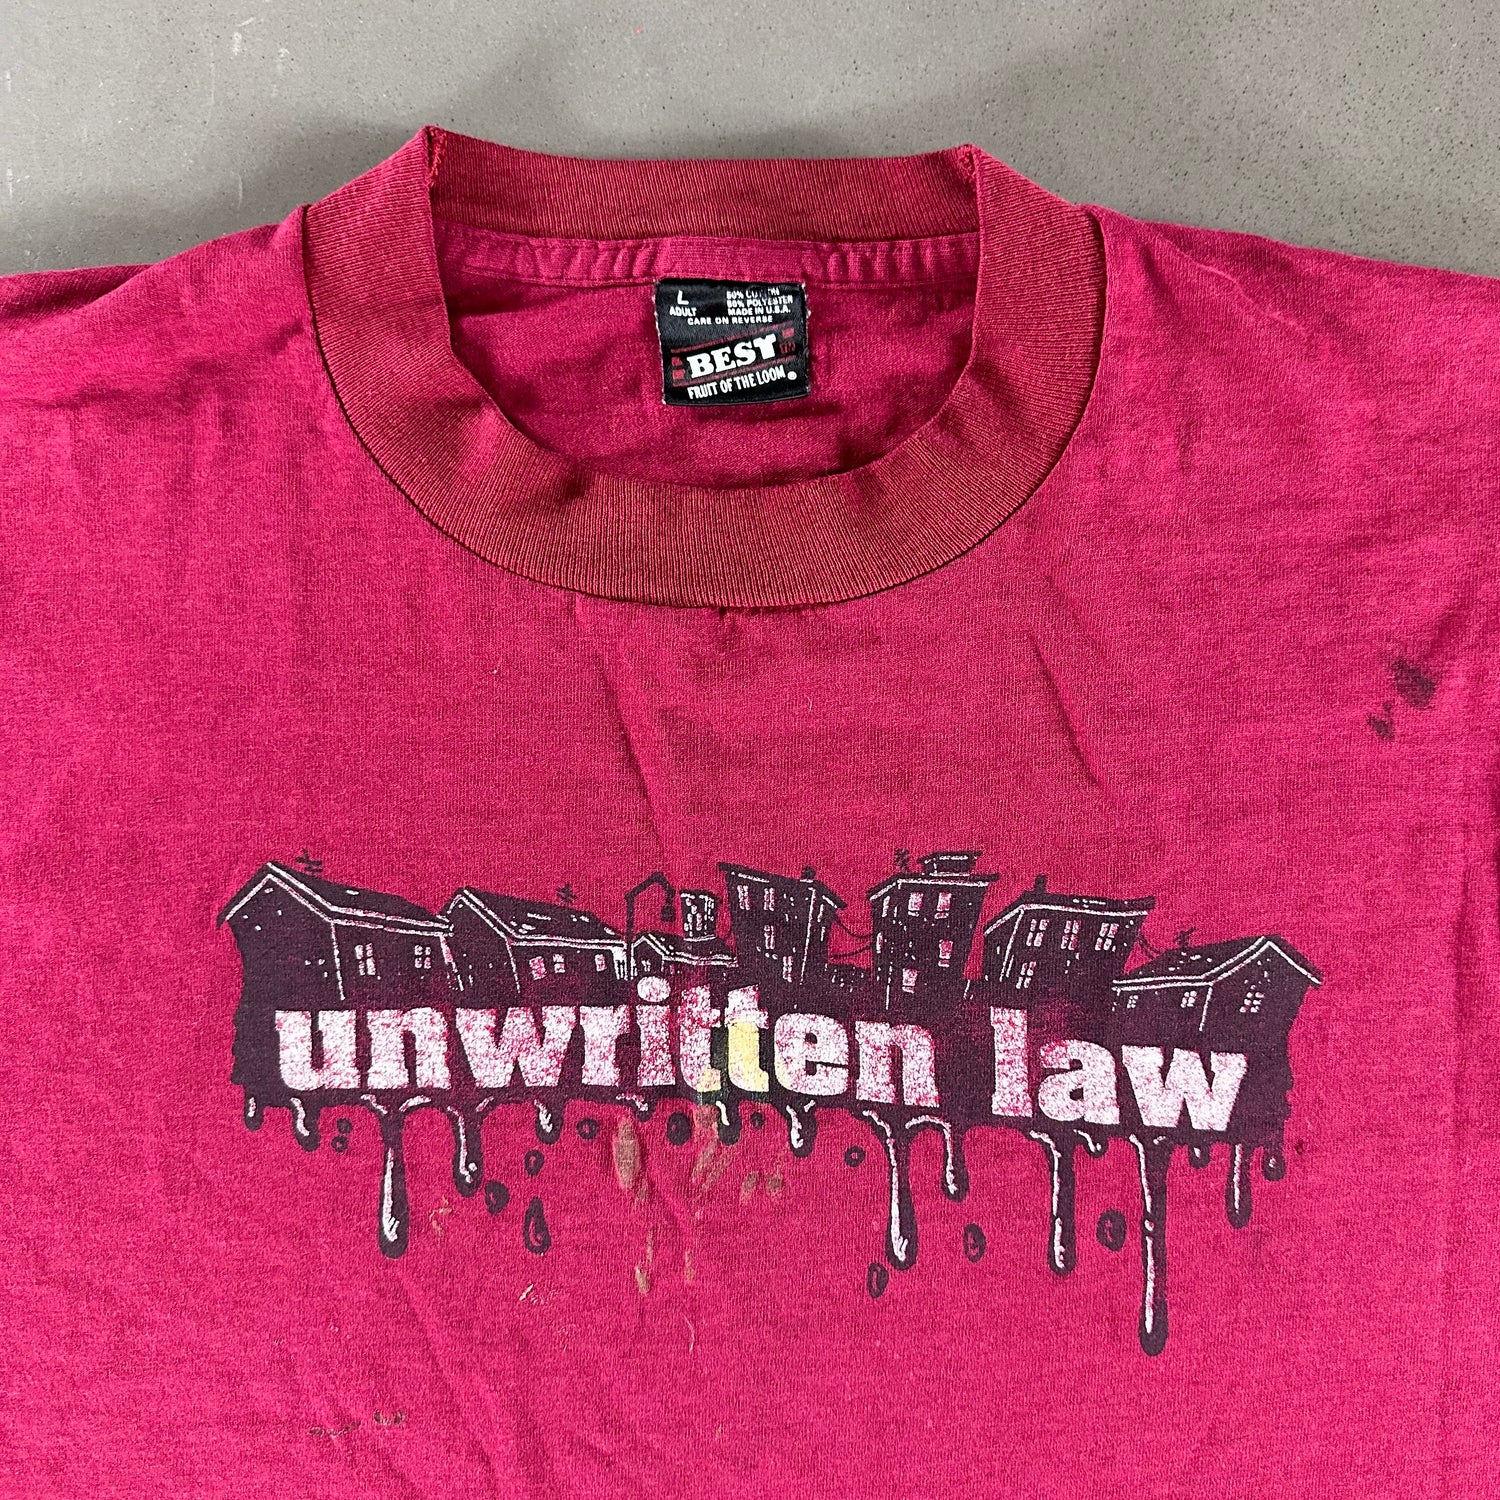 Vintage 1990s Unwritten Law T-shirt size Large